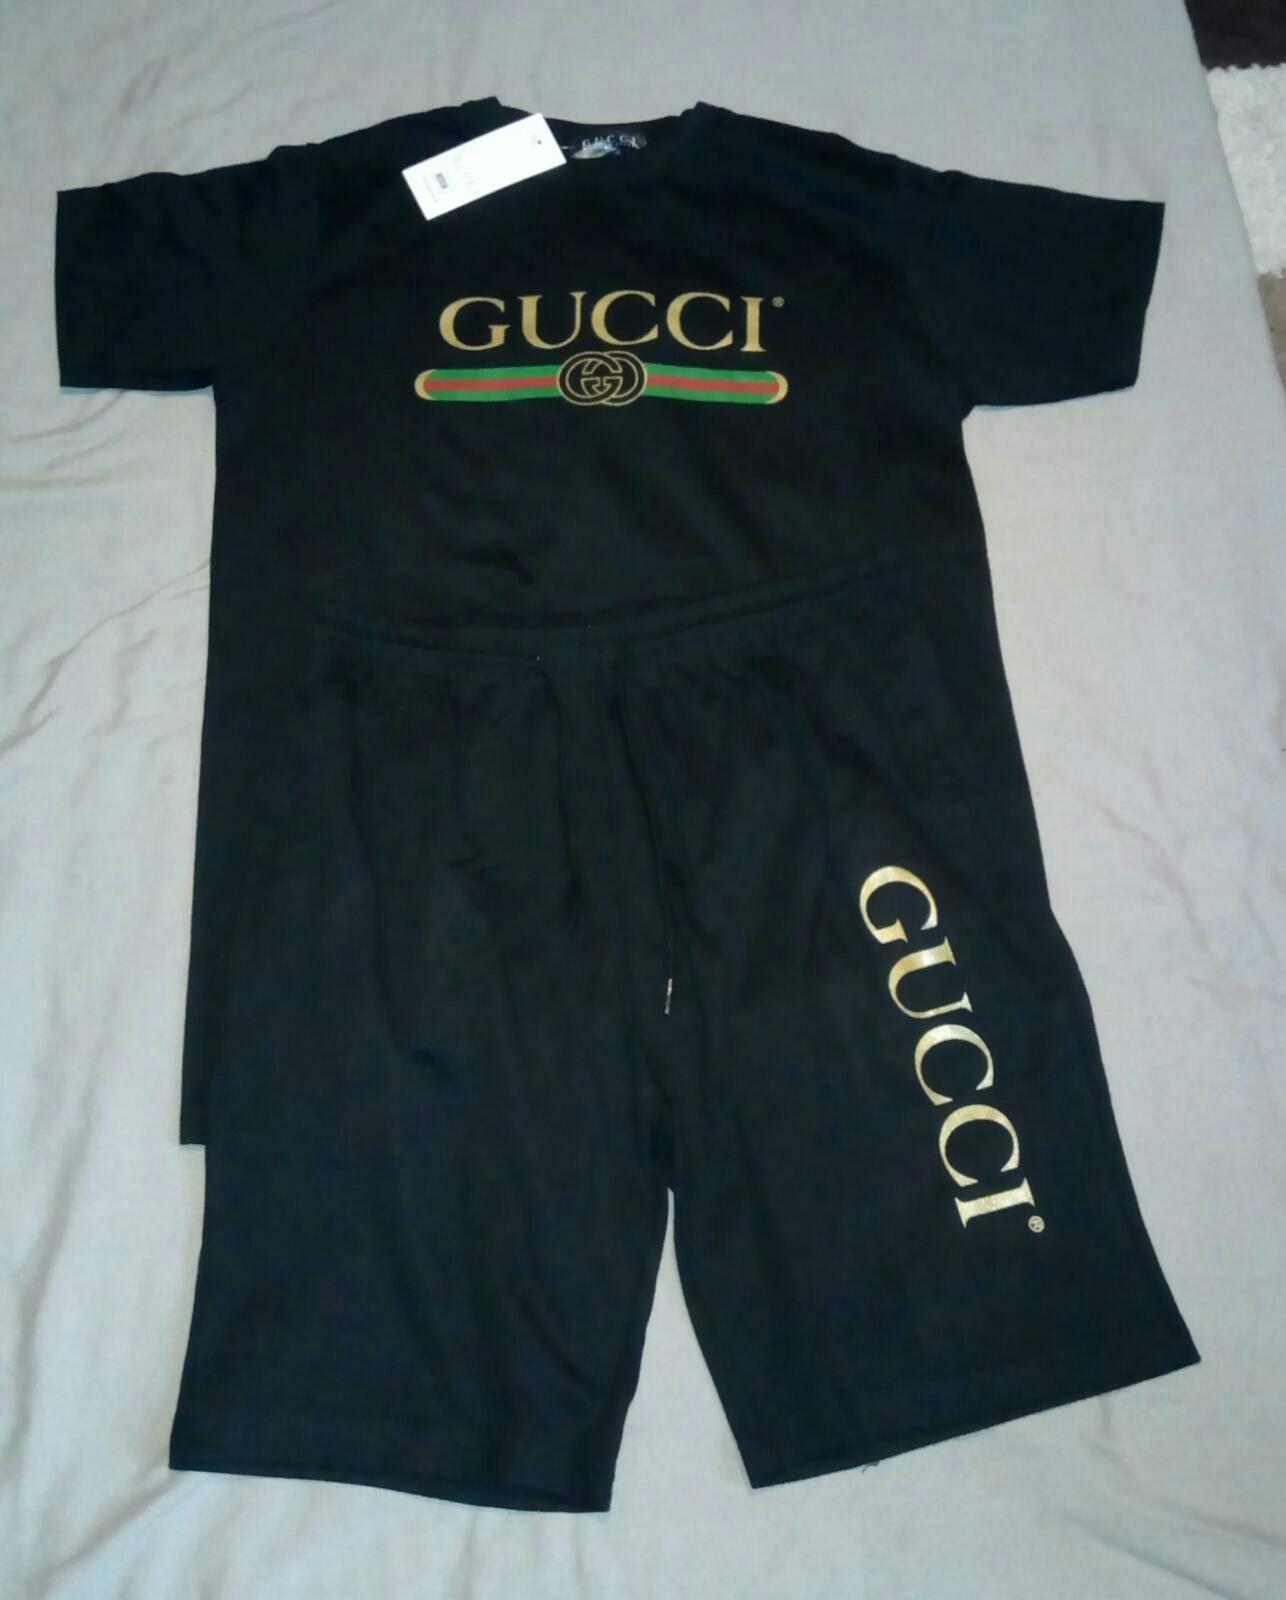 Gucci Clothes For Roblox Buyudum Cocuk Oldum - codes roblox pants gucci